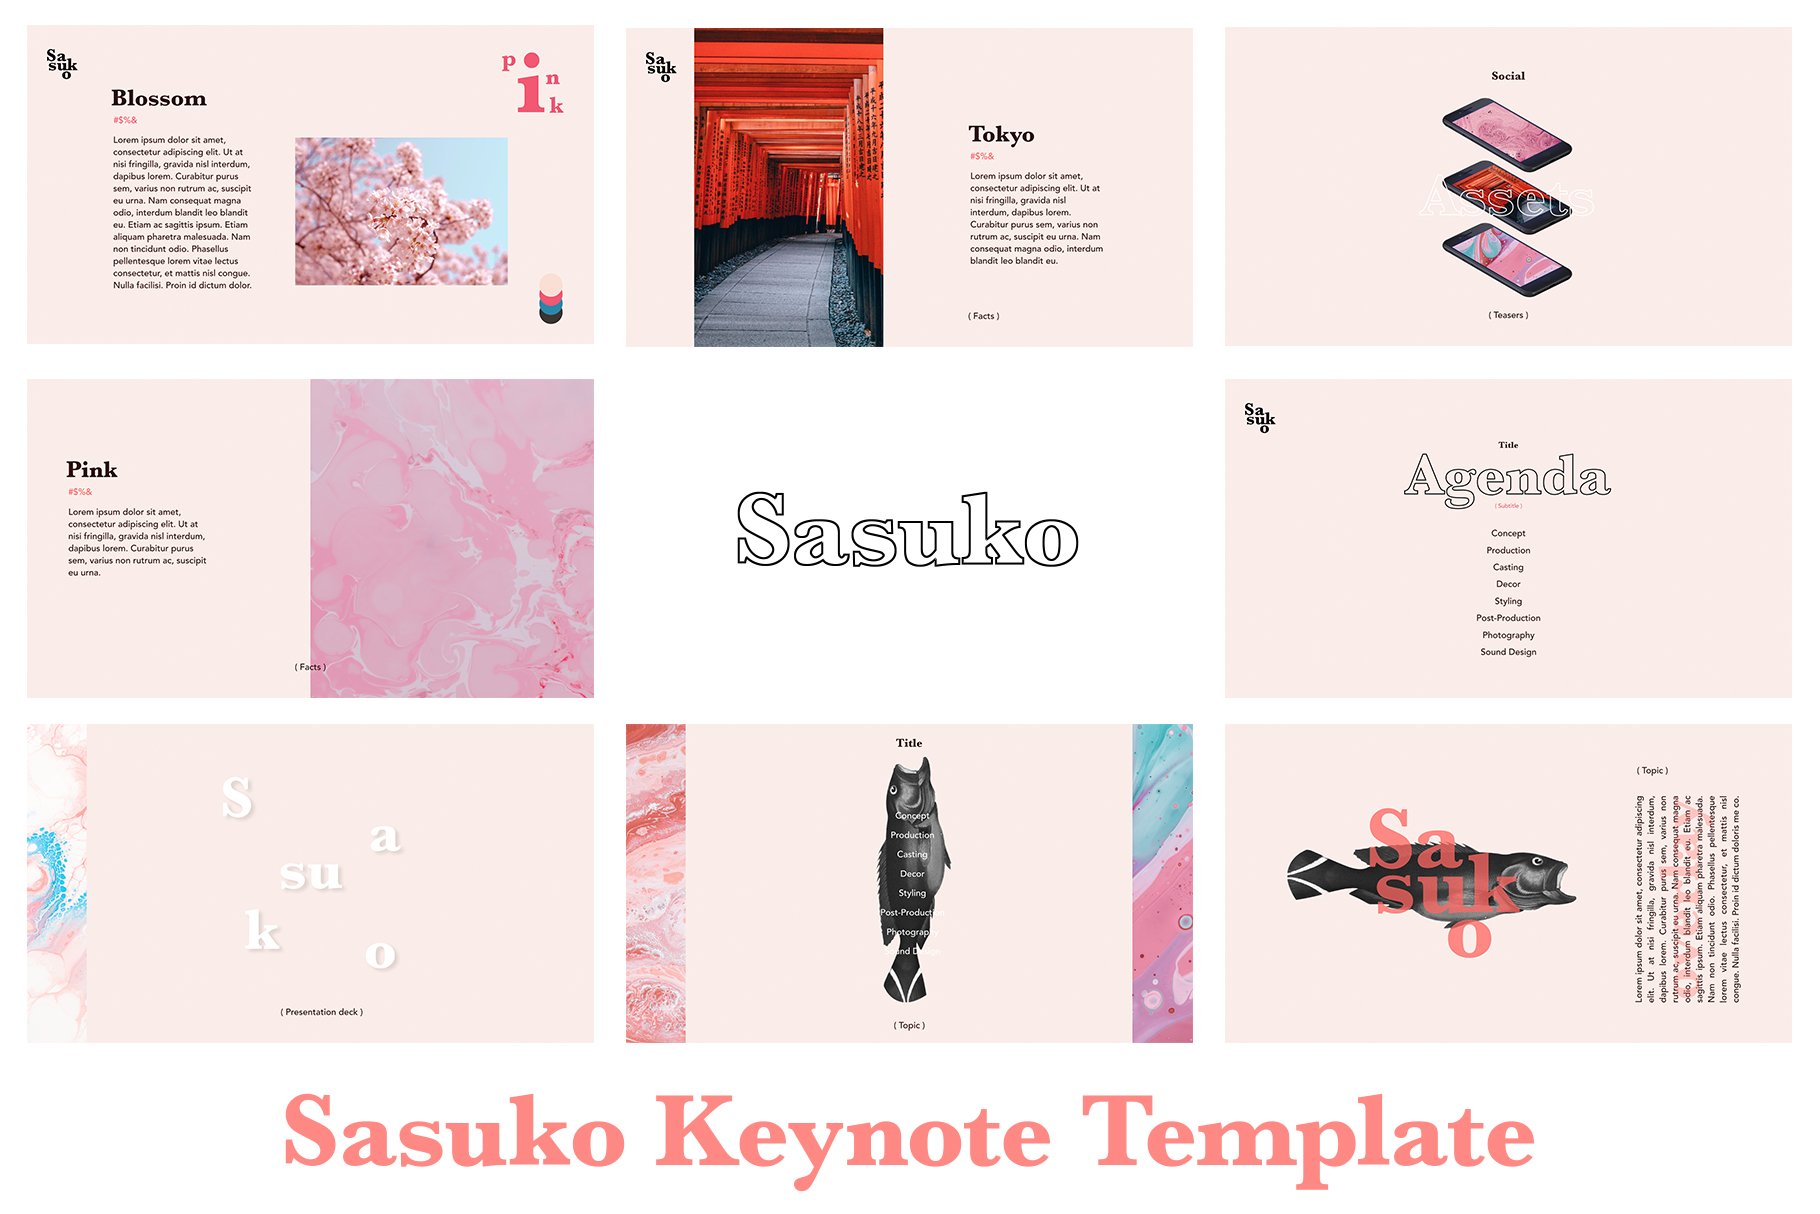 Sasuko keynote template.